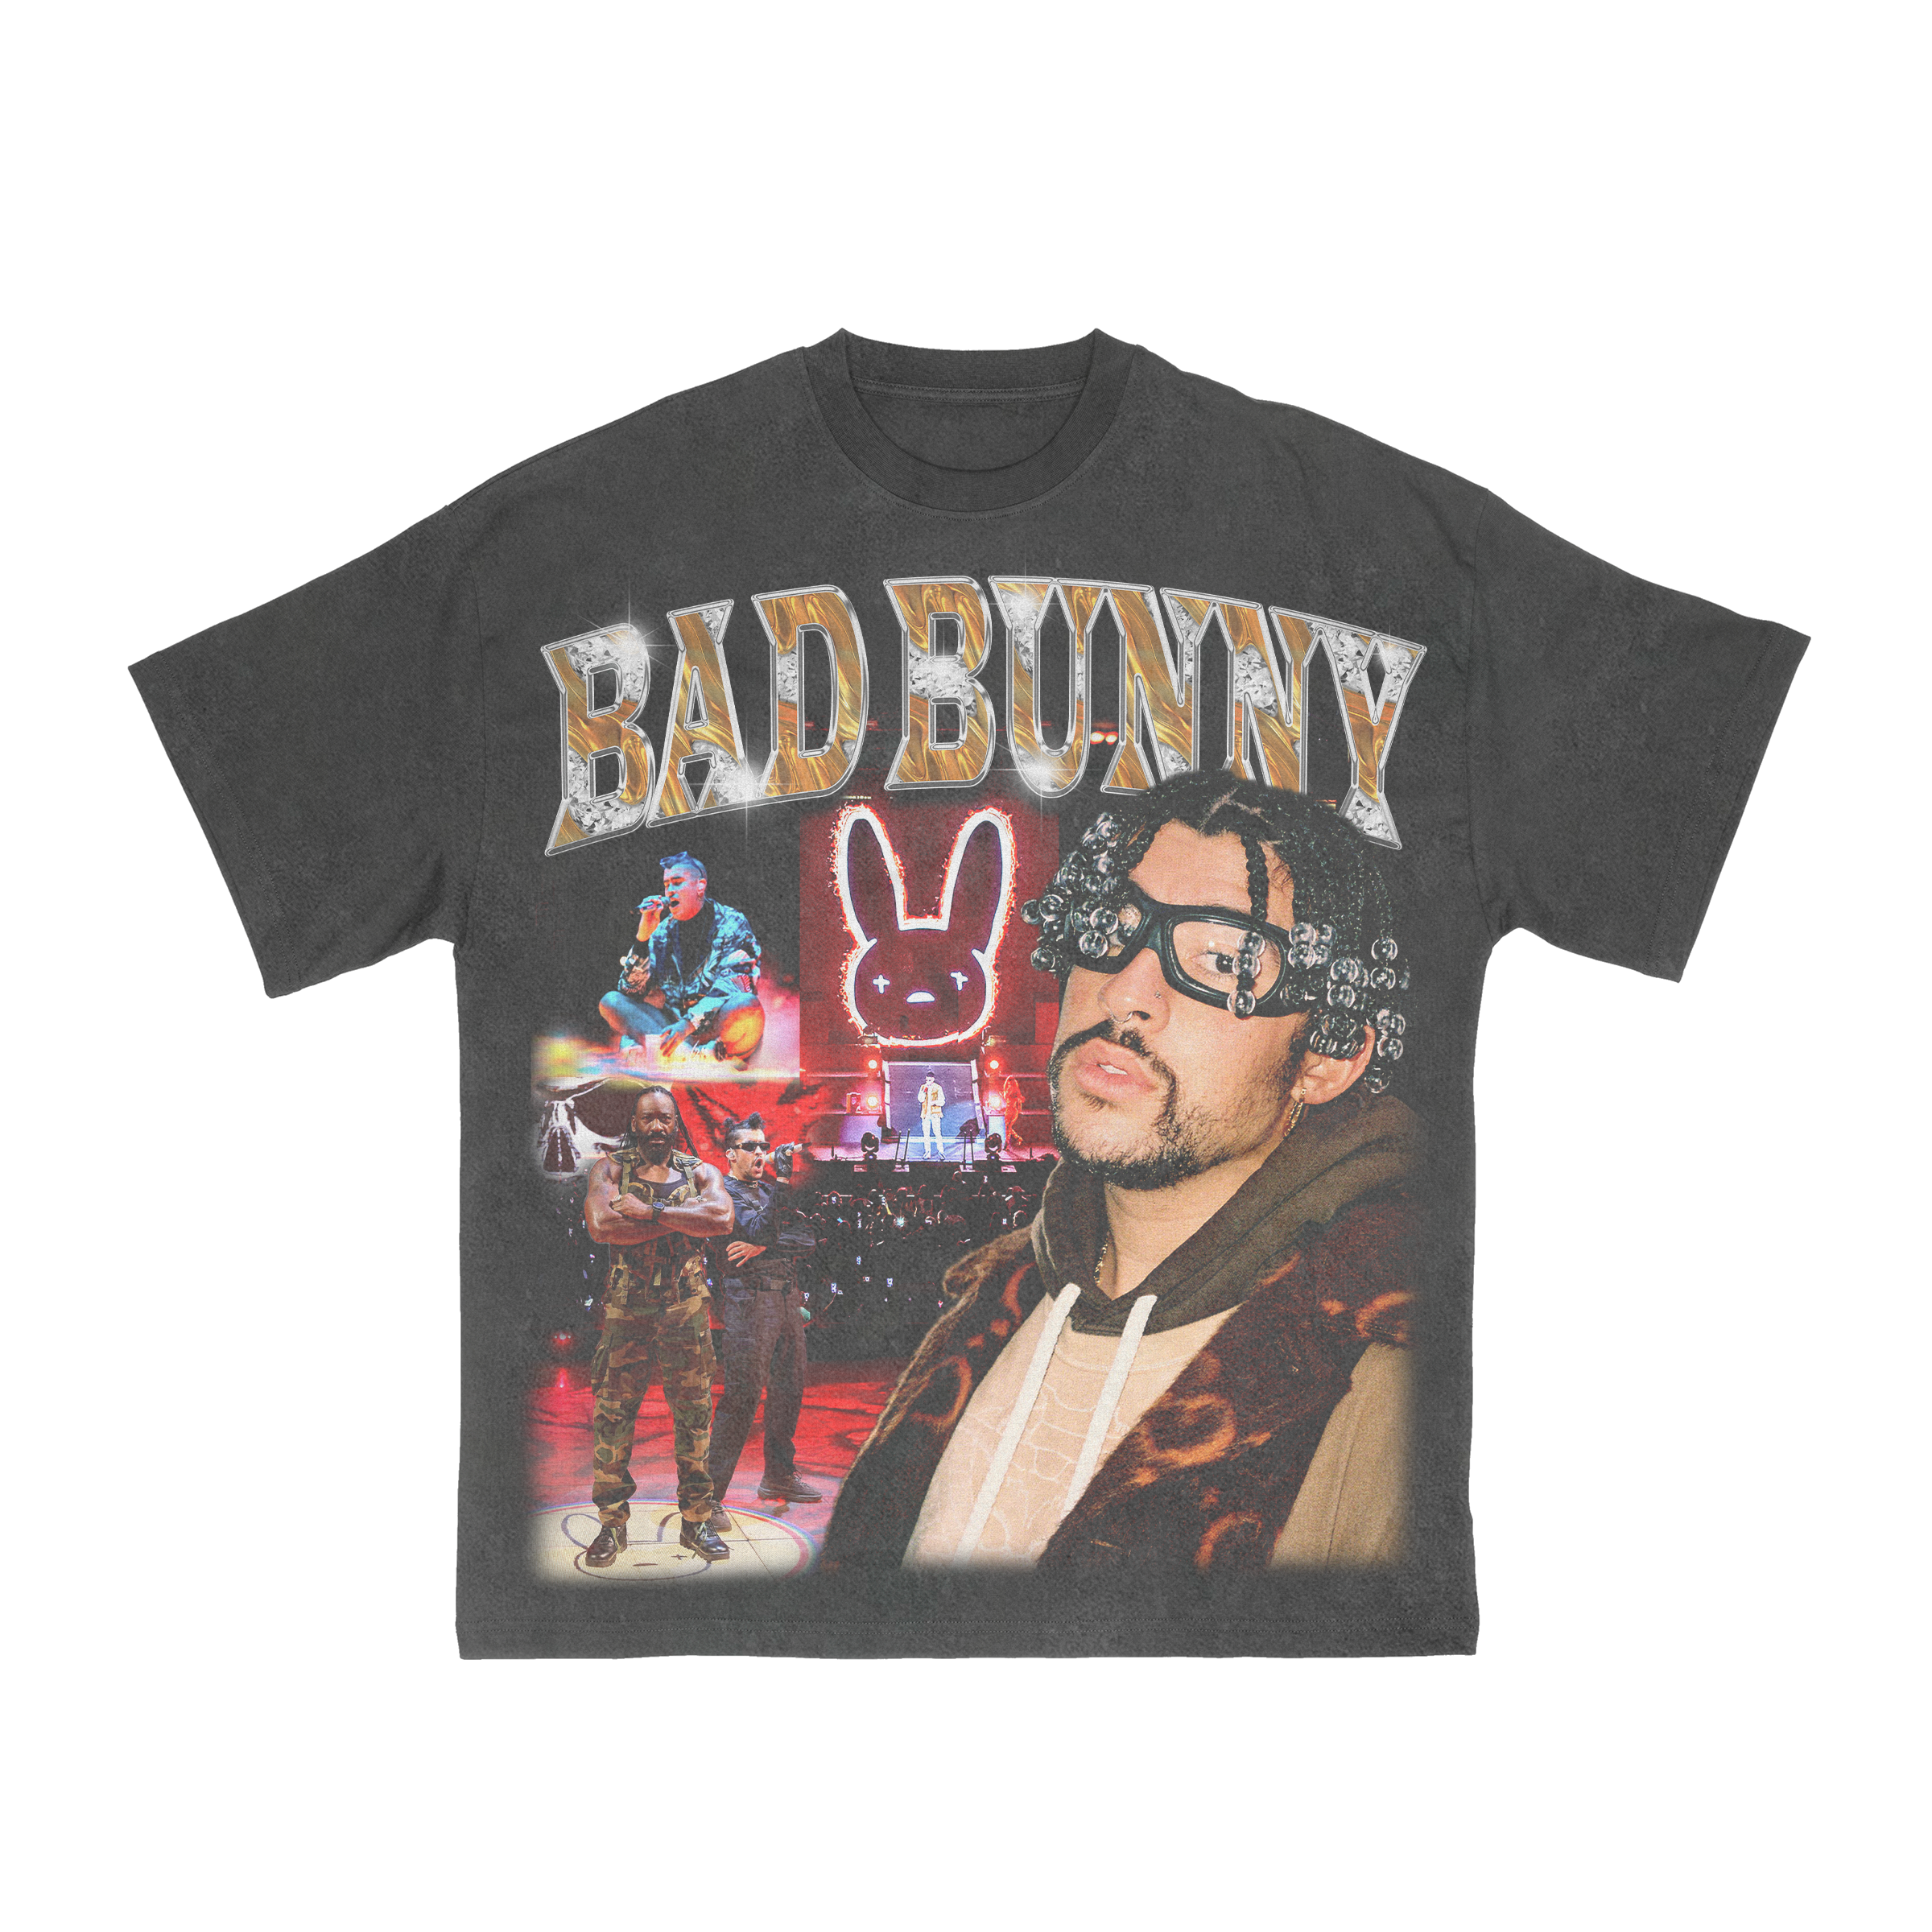 Bad Bunny T-shirts - Vintage Graphic Bad Bunny Printed T-shirt